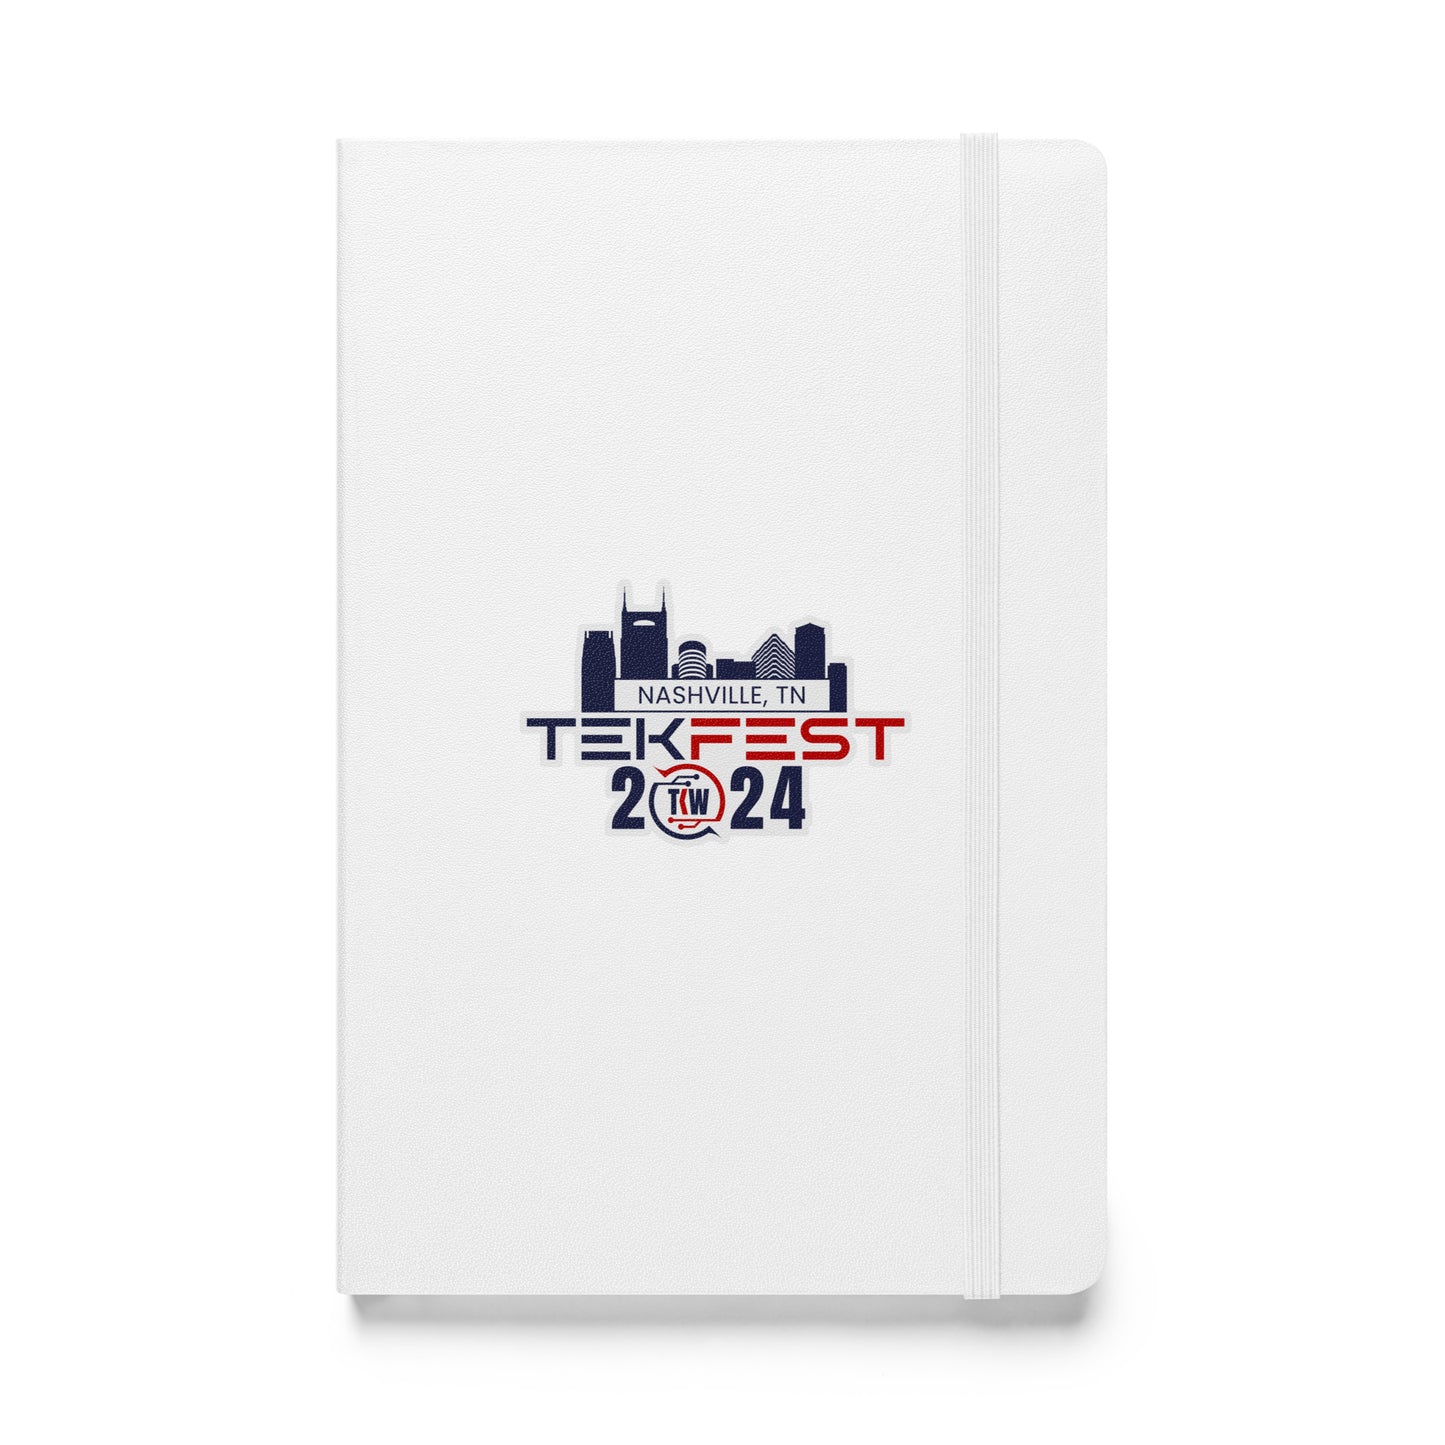 TEKFest Hardcover bound notebook